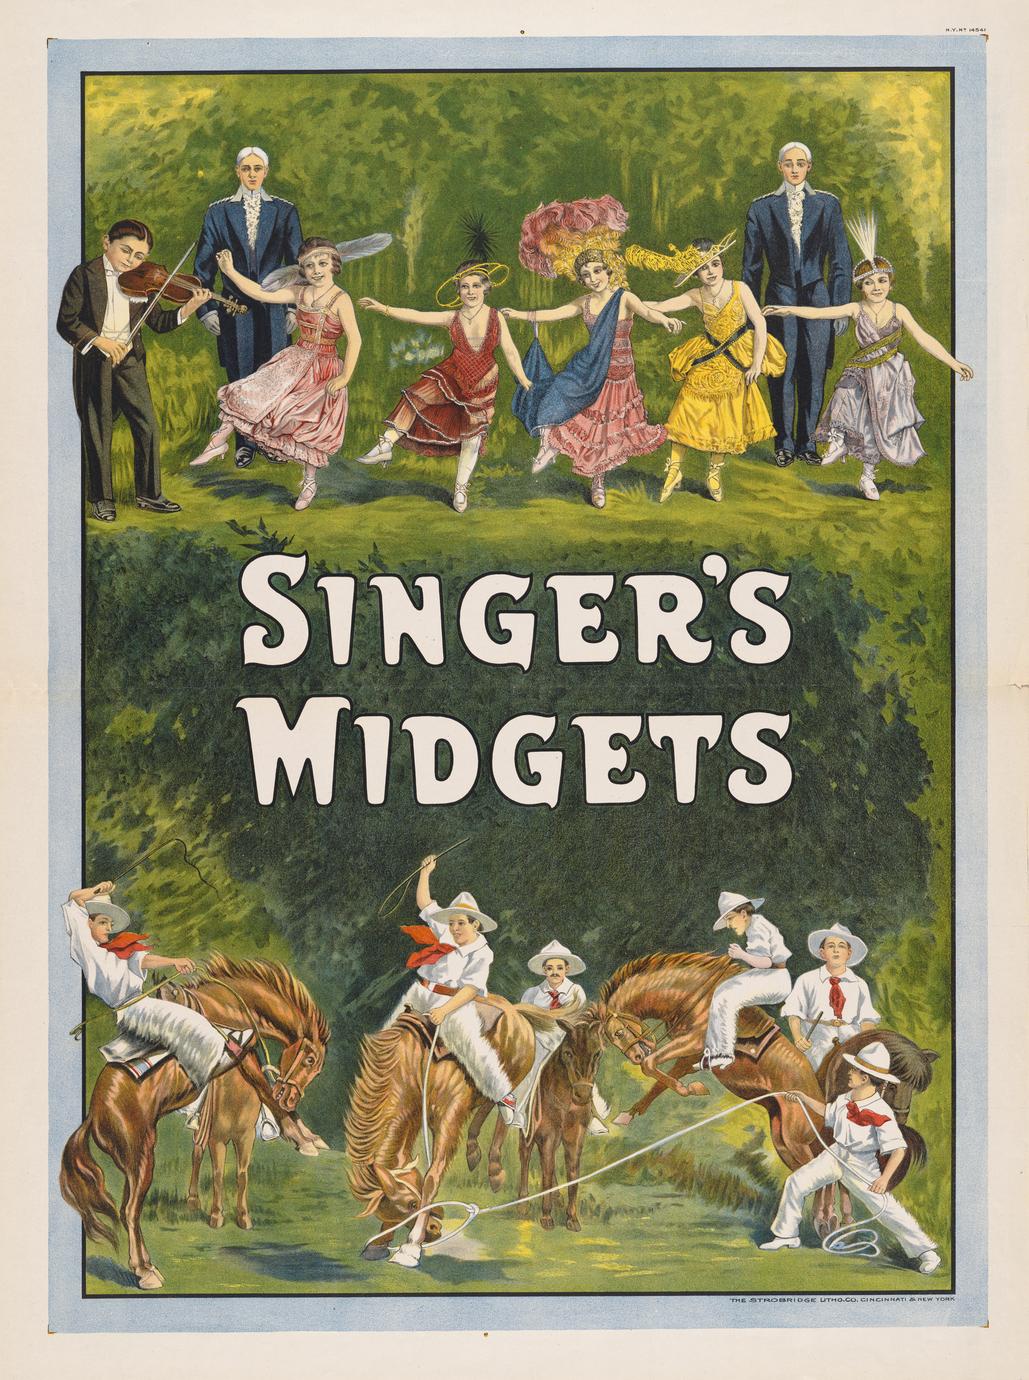 Singer's Midgets